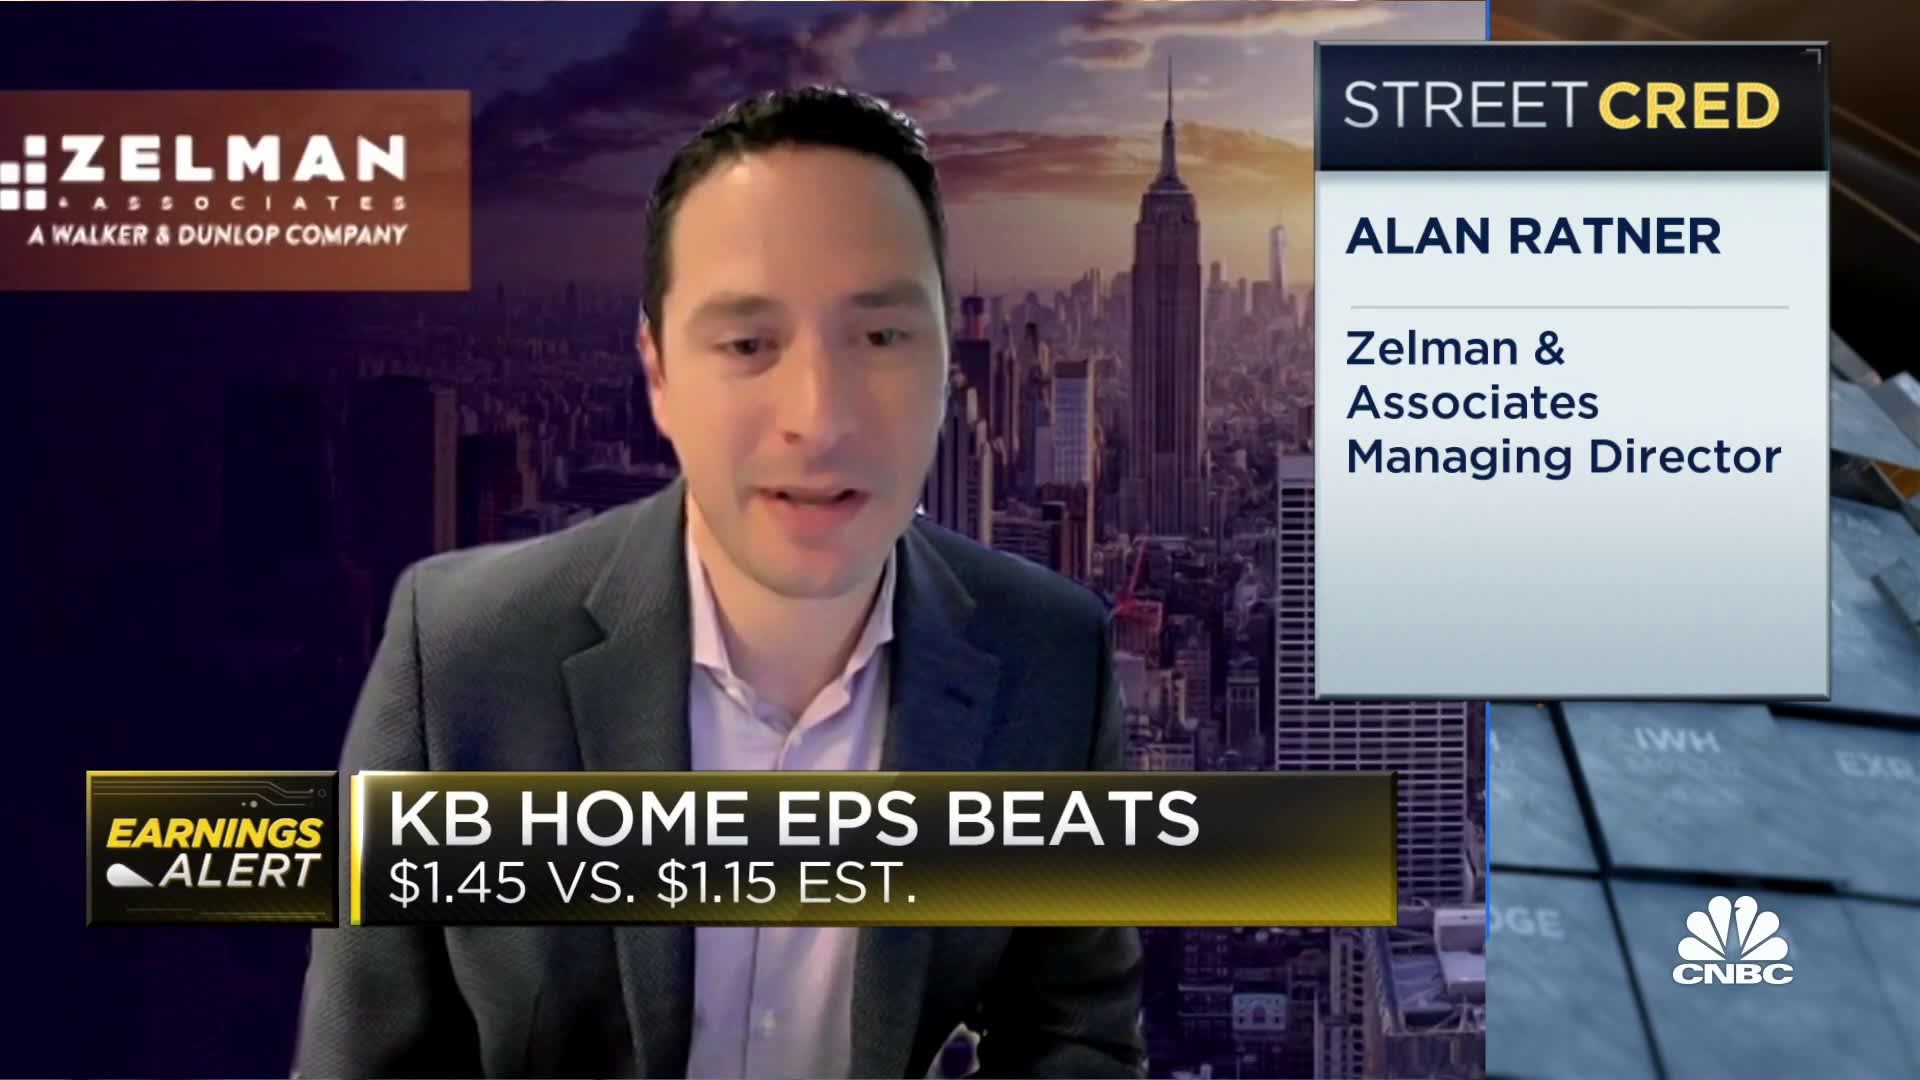 Vi ser definitivt tegn til stabilisering i boligmarkedet, sier Zelman & Associates' Alan Ratner